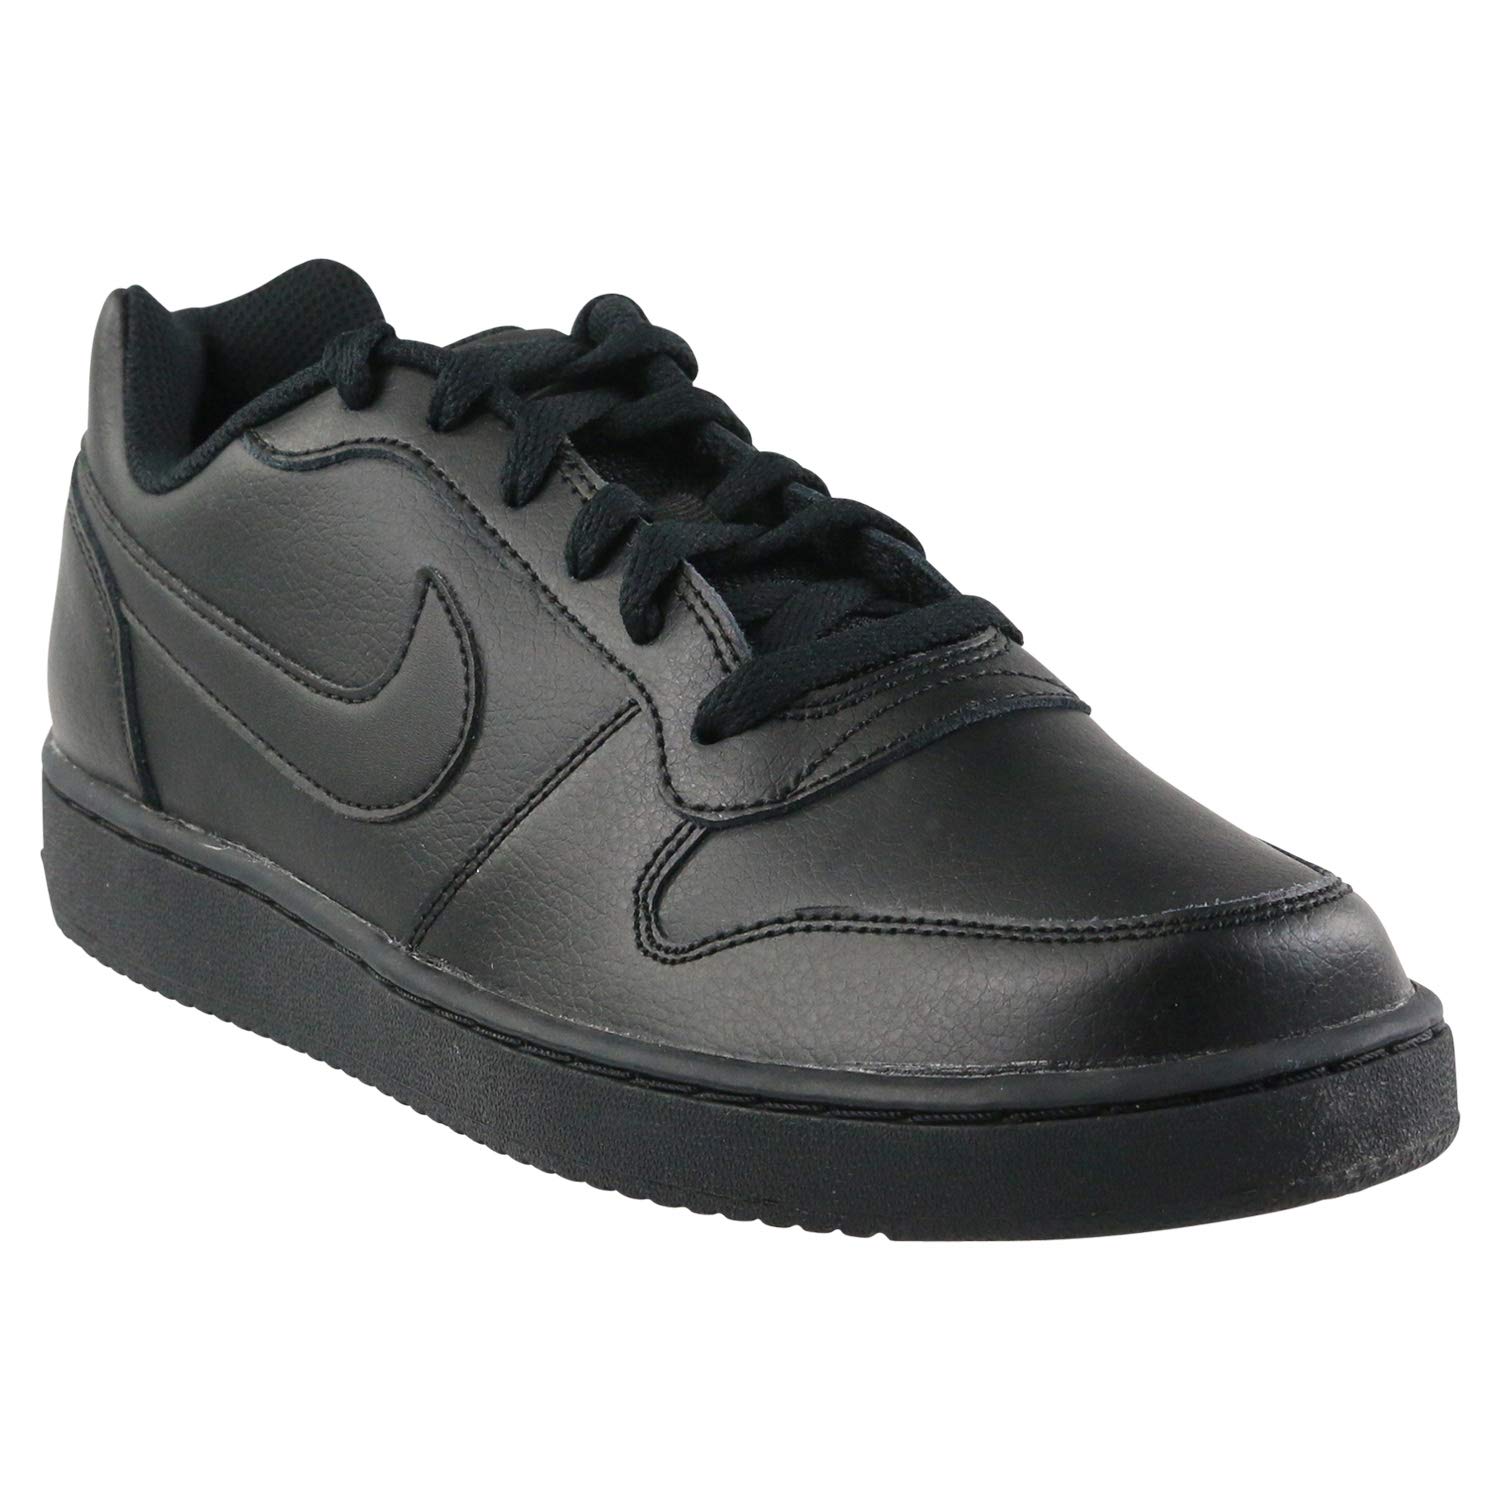 Nike Men's Ebernon Low Basketball Shoe, Black/Black, 11 Regular US